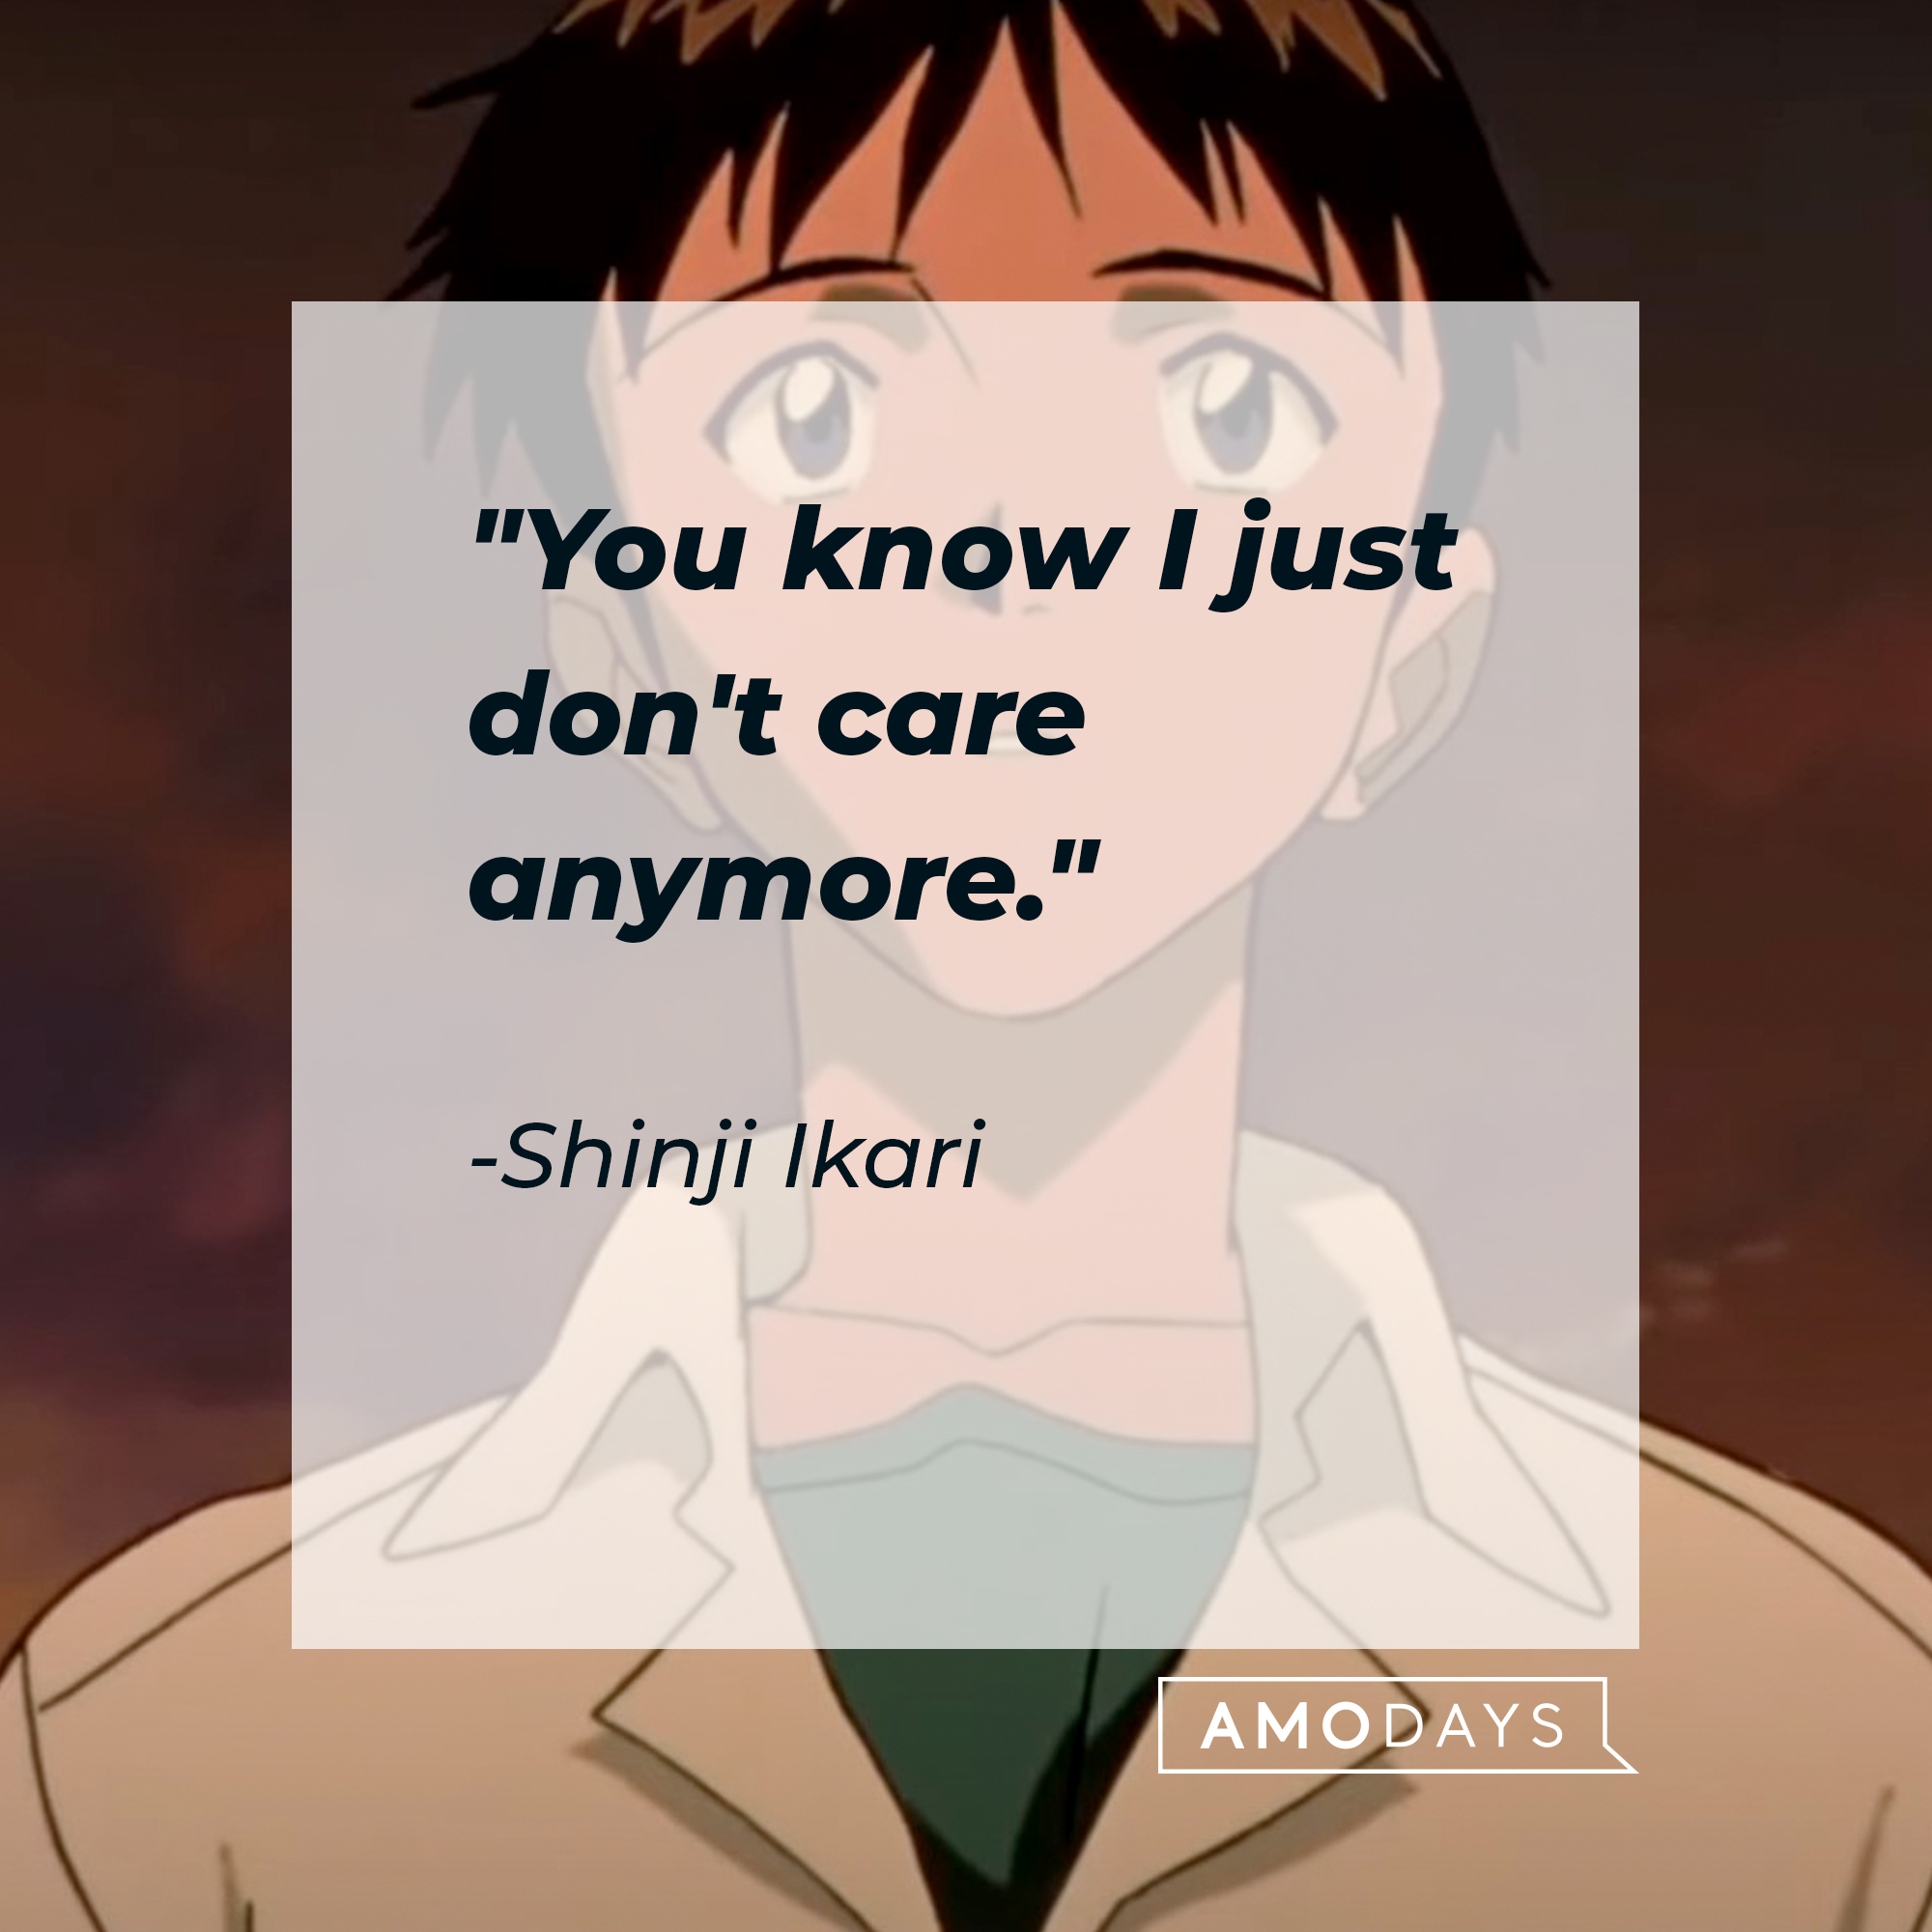 Shinji Ikari's quote: "You know I just don't care anymore." | Source: Facebook.com/EvangelionMovie